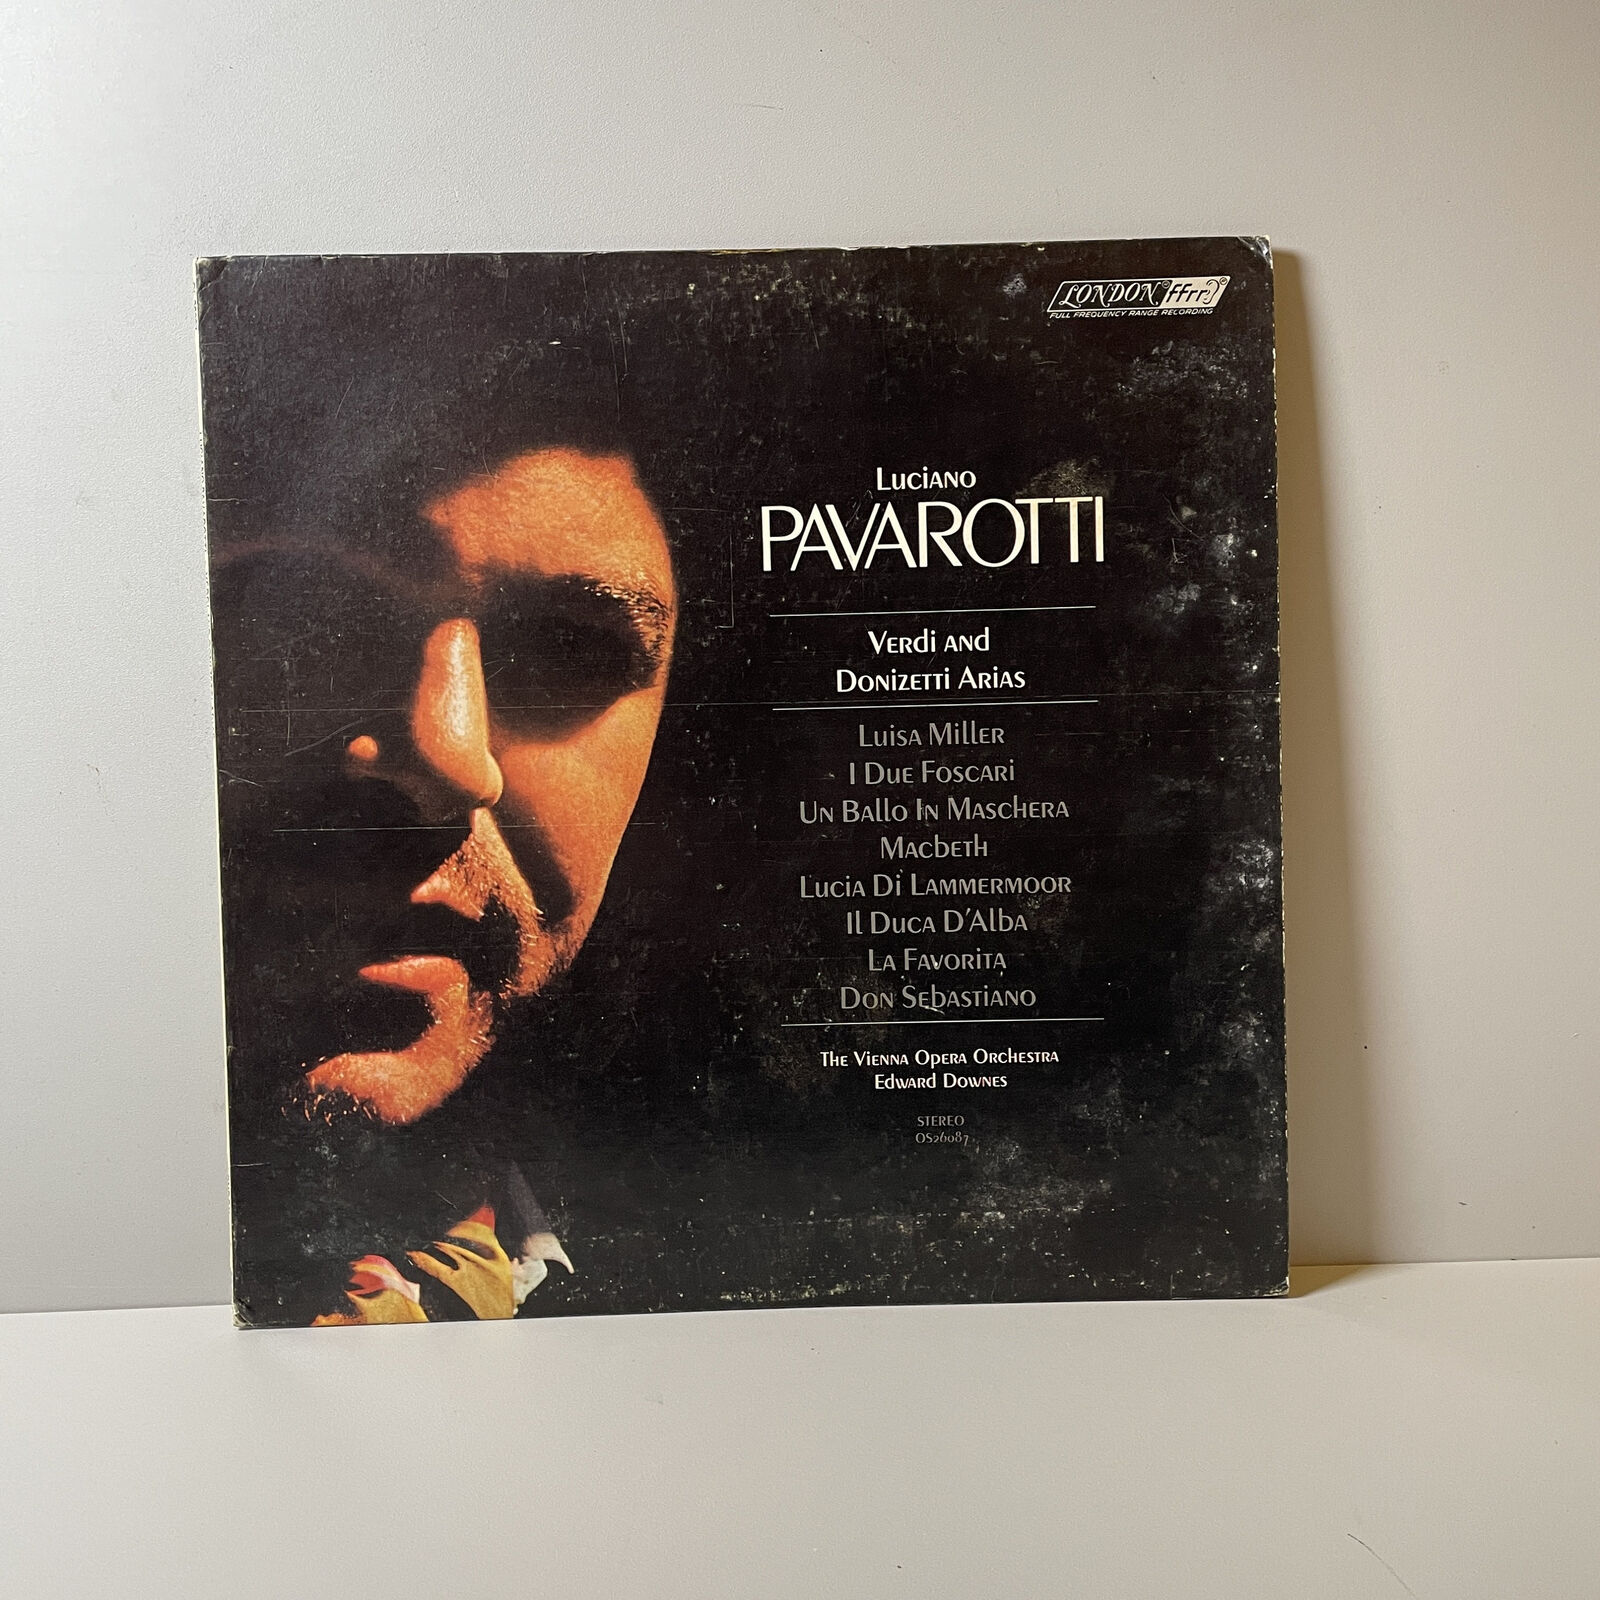 Luciano Pavarotti - Verdi And Donizetti Arias - Vinyl LP Record - 1968